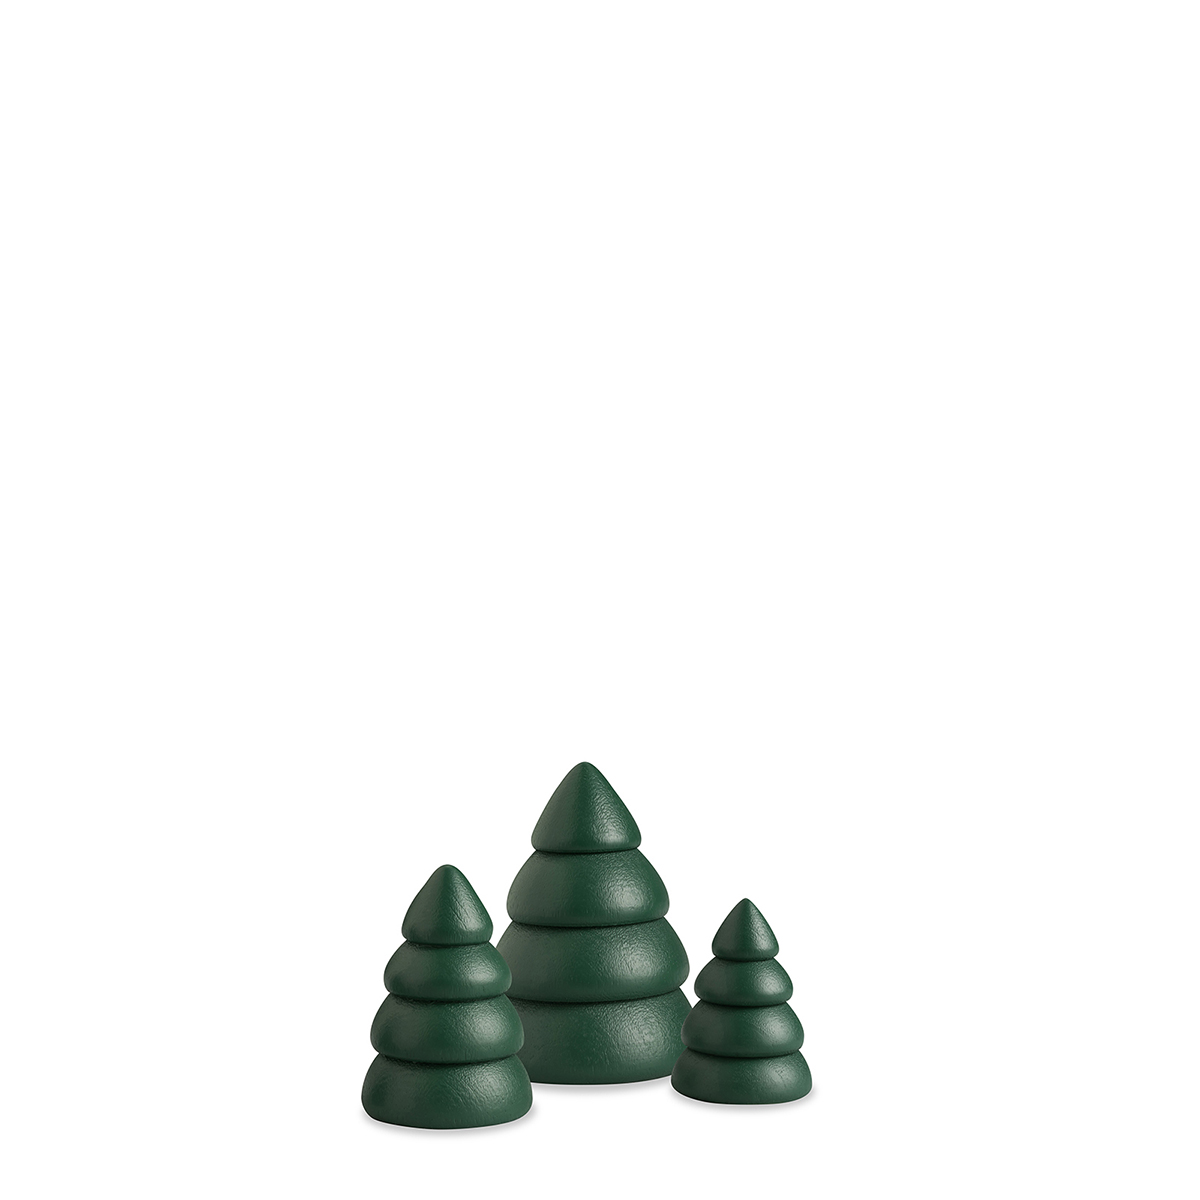 Miniatur Baumset 1 | Bäume grün, 3-teilig